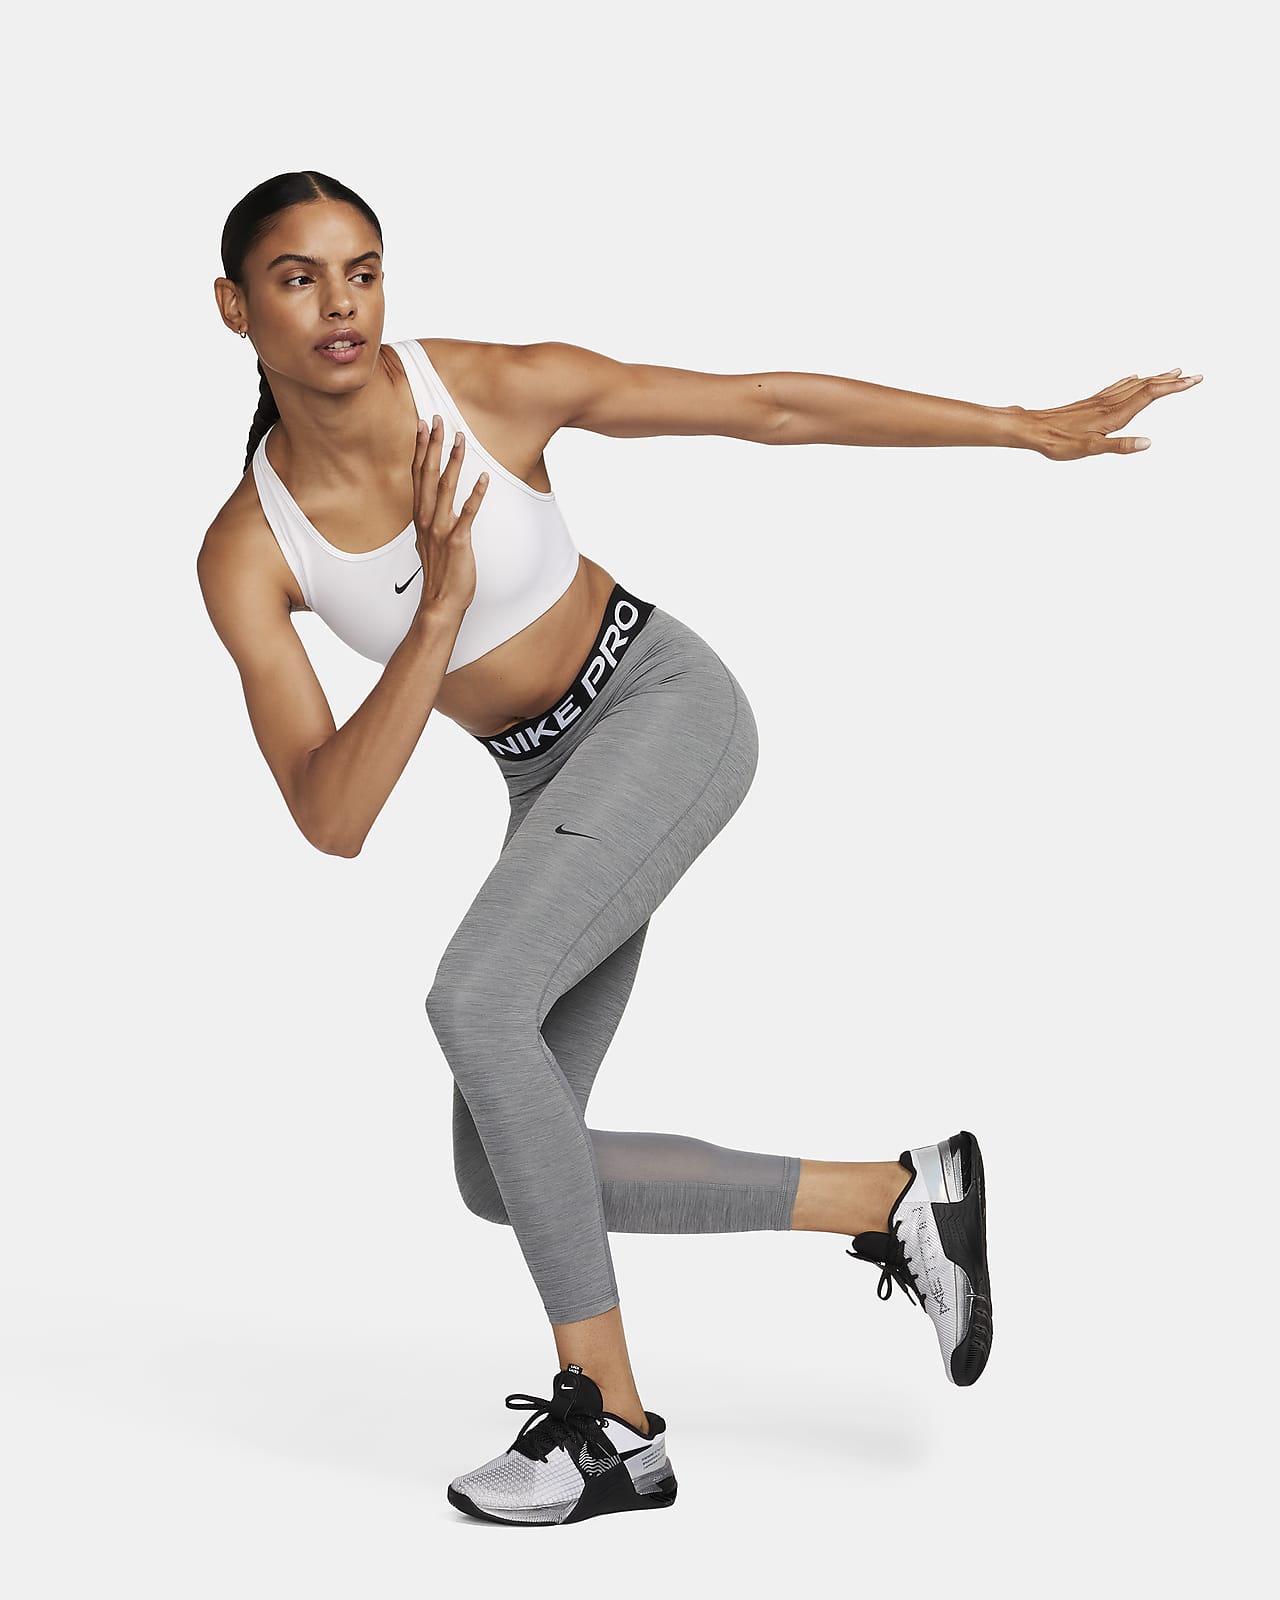 Nike Sportswear Essential 7/8 black women's leggings - NIKE - Pavidas